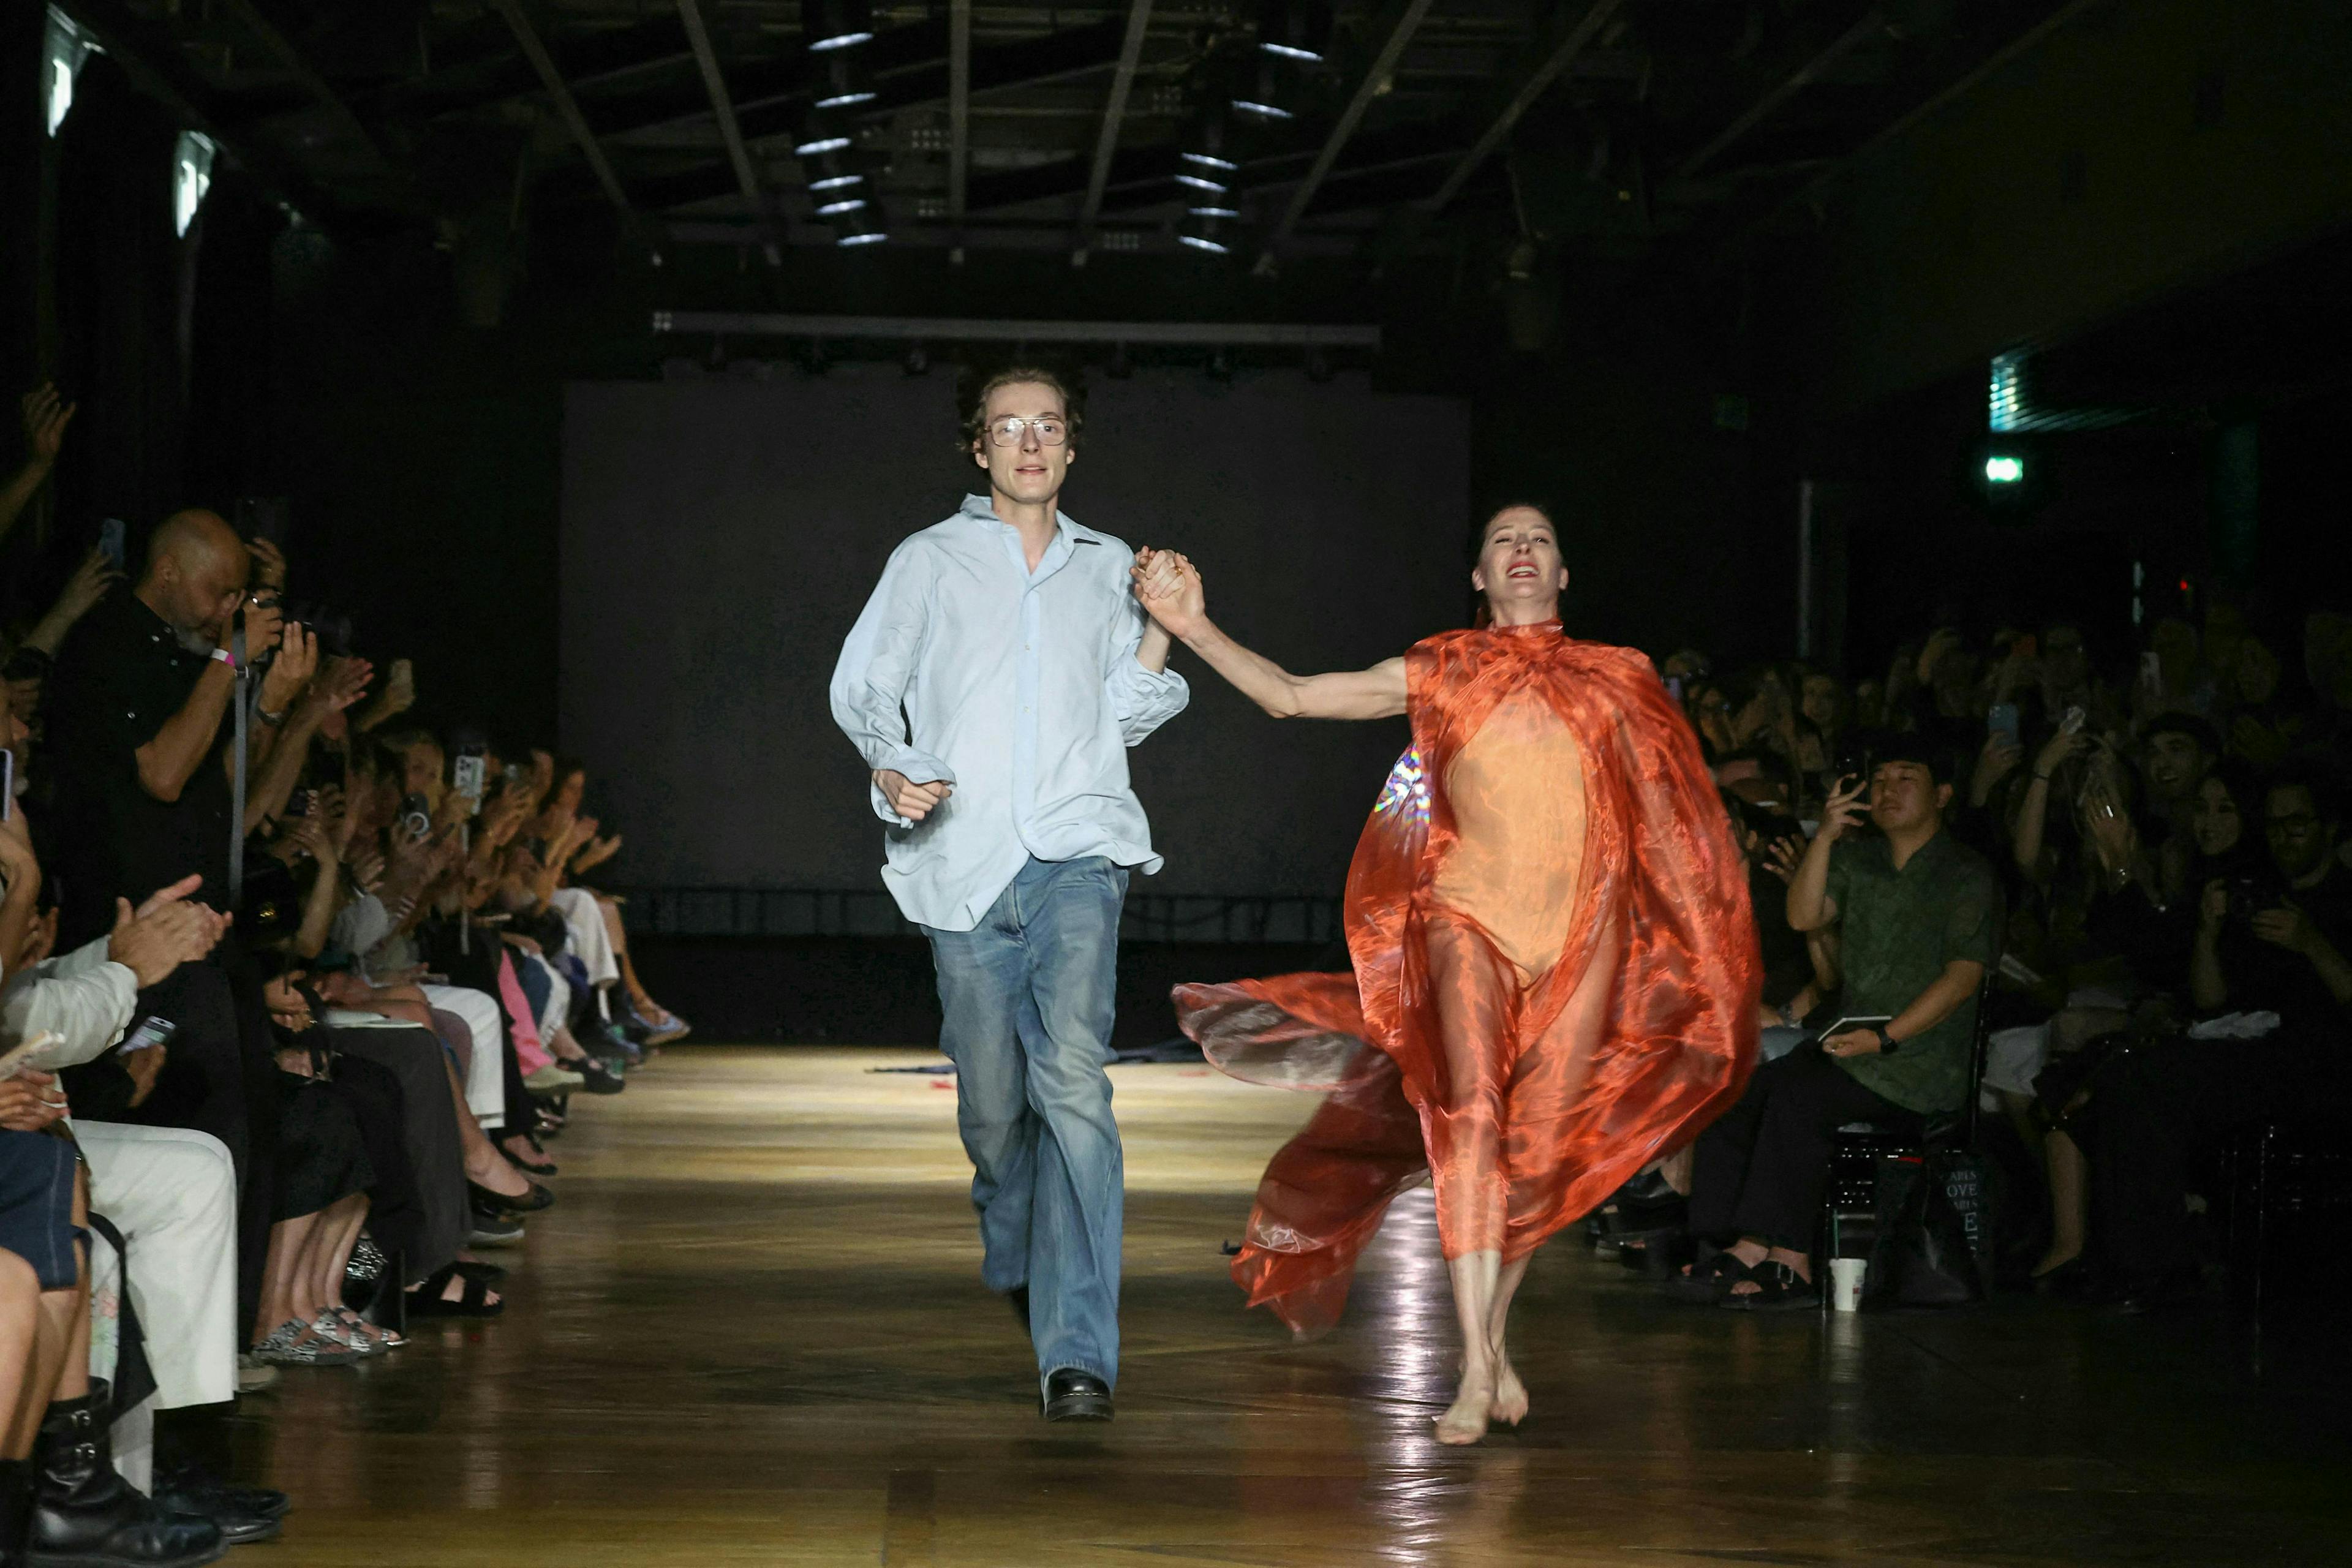 autumn fashion collection fashion luxury paris horizontal adult female person woman dress male man dancing formal wear